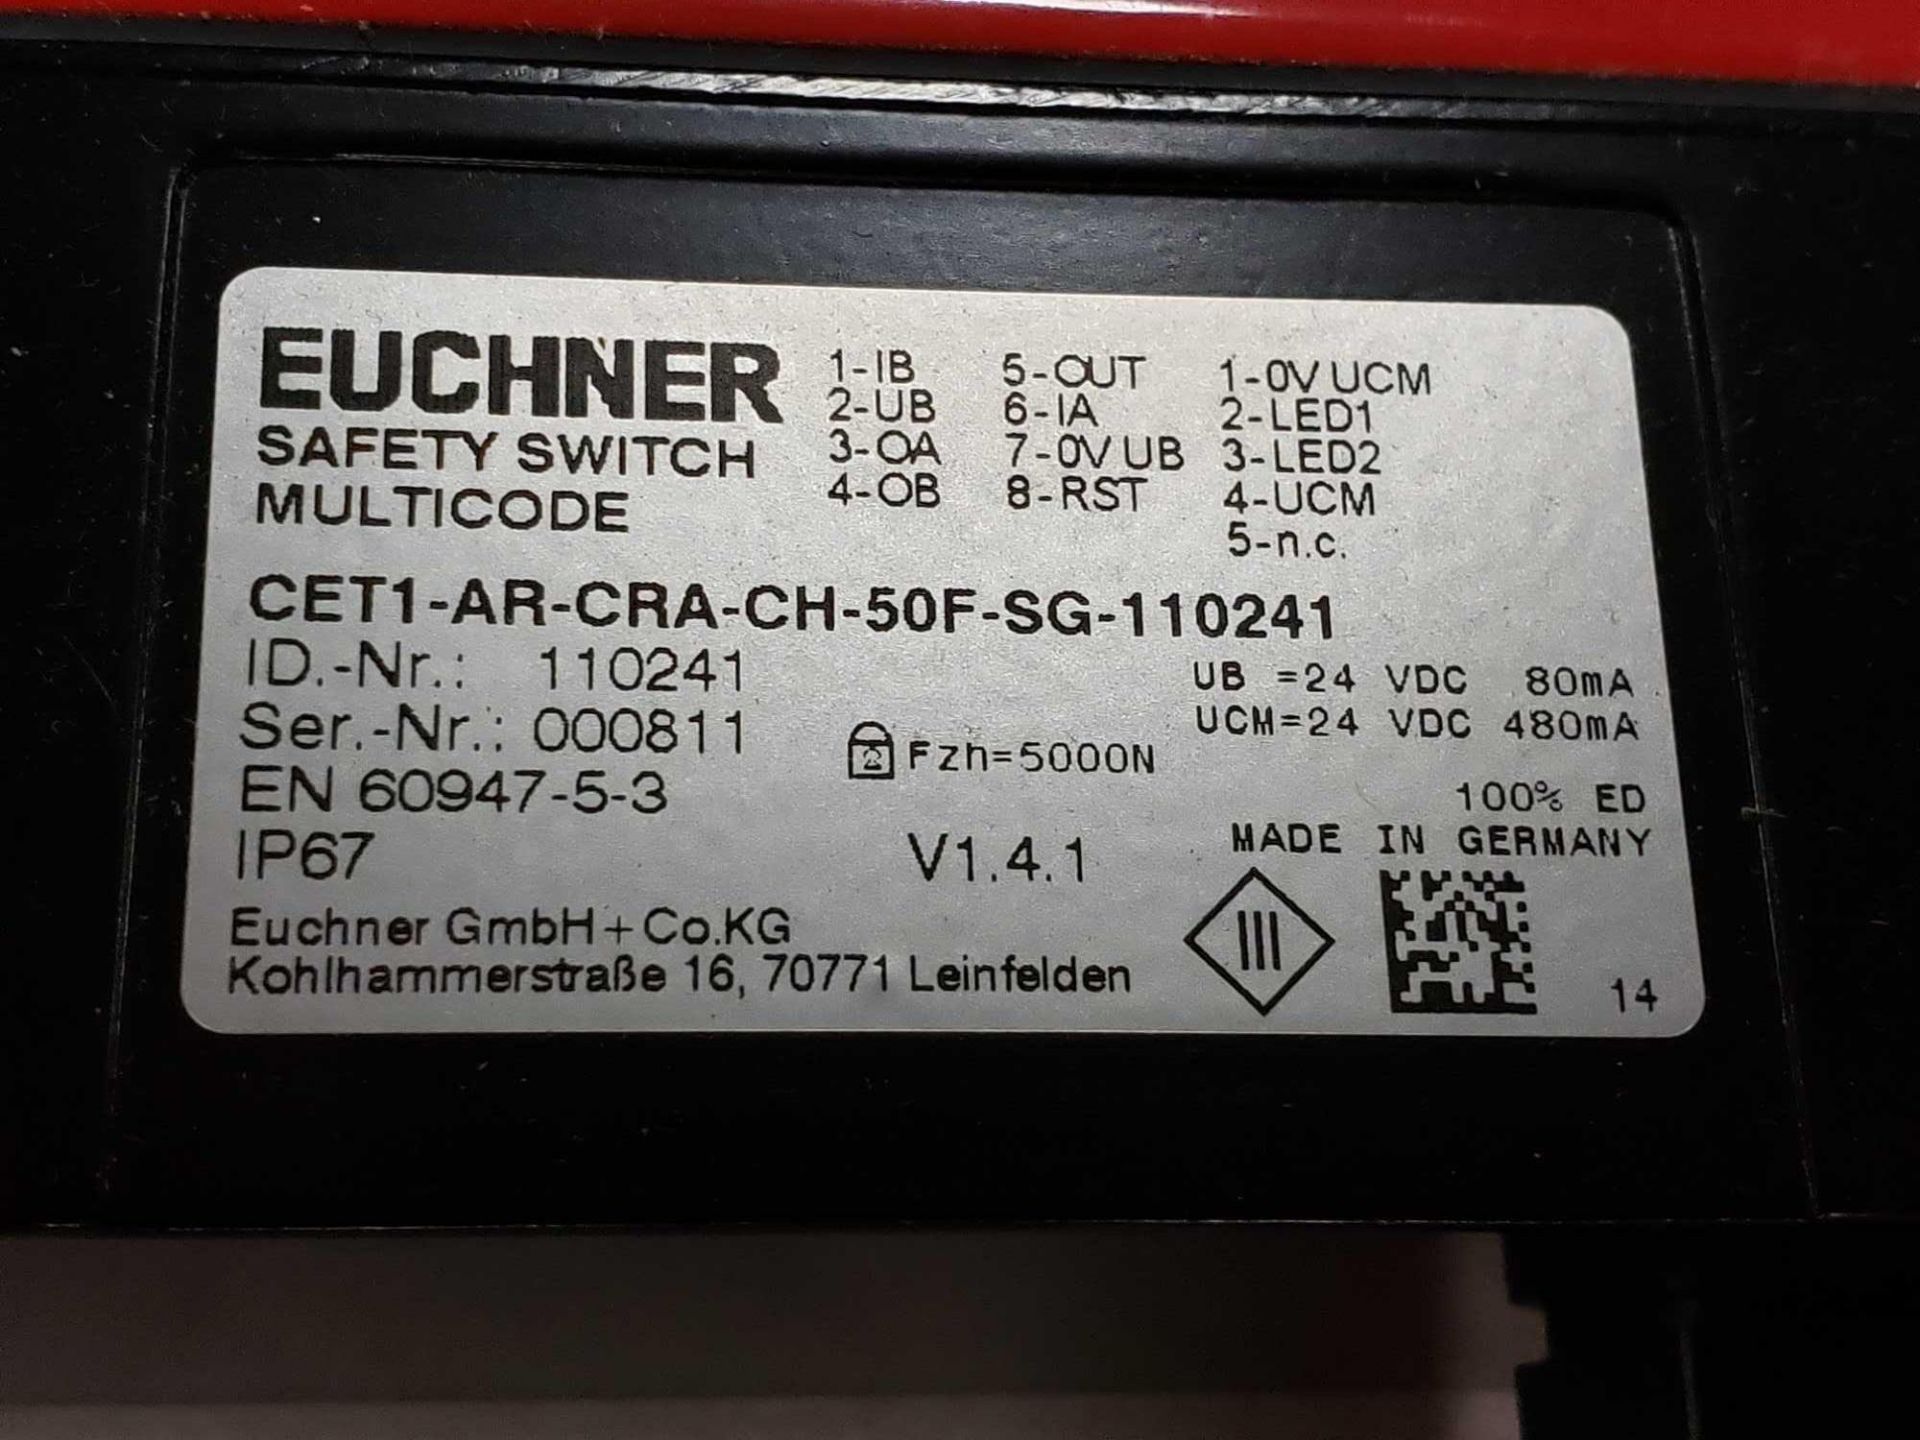 Euchner model CET1-AR-CRA-CH-50F-SG-110241. New in box. - Image 4 of 4